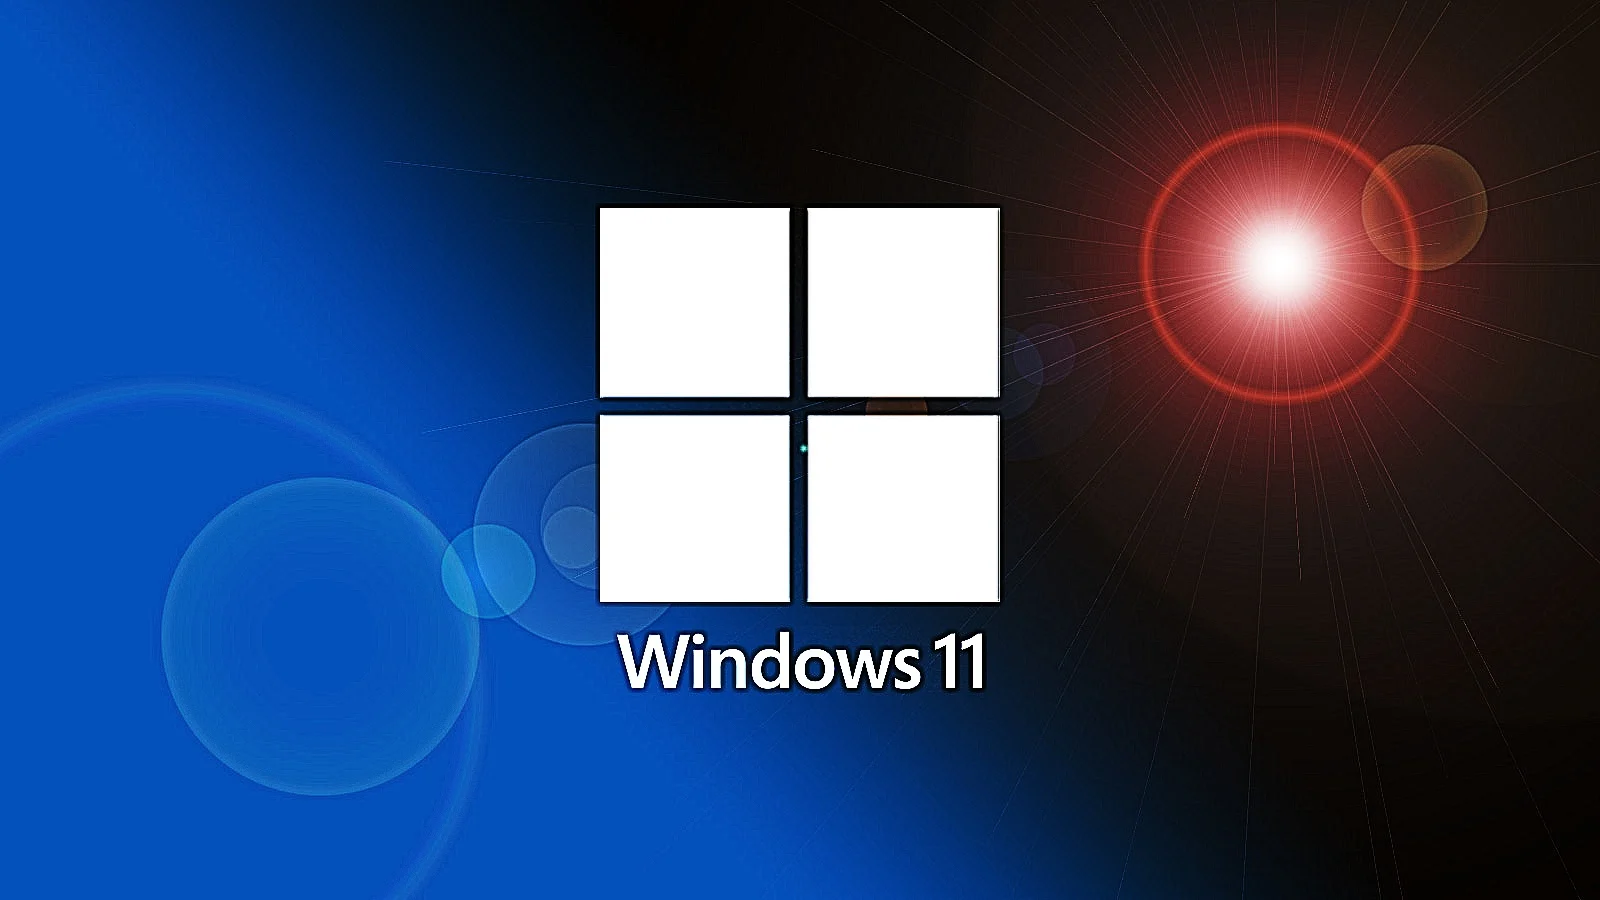 Microsoft is going to add RGB lighting controls to Windows 11